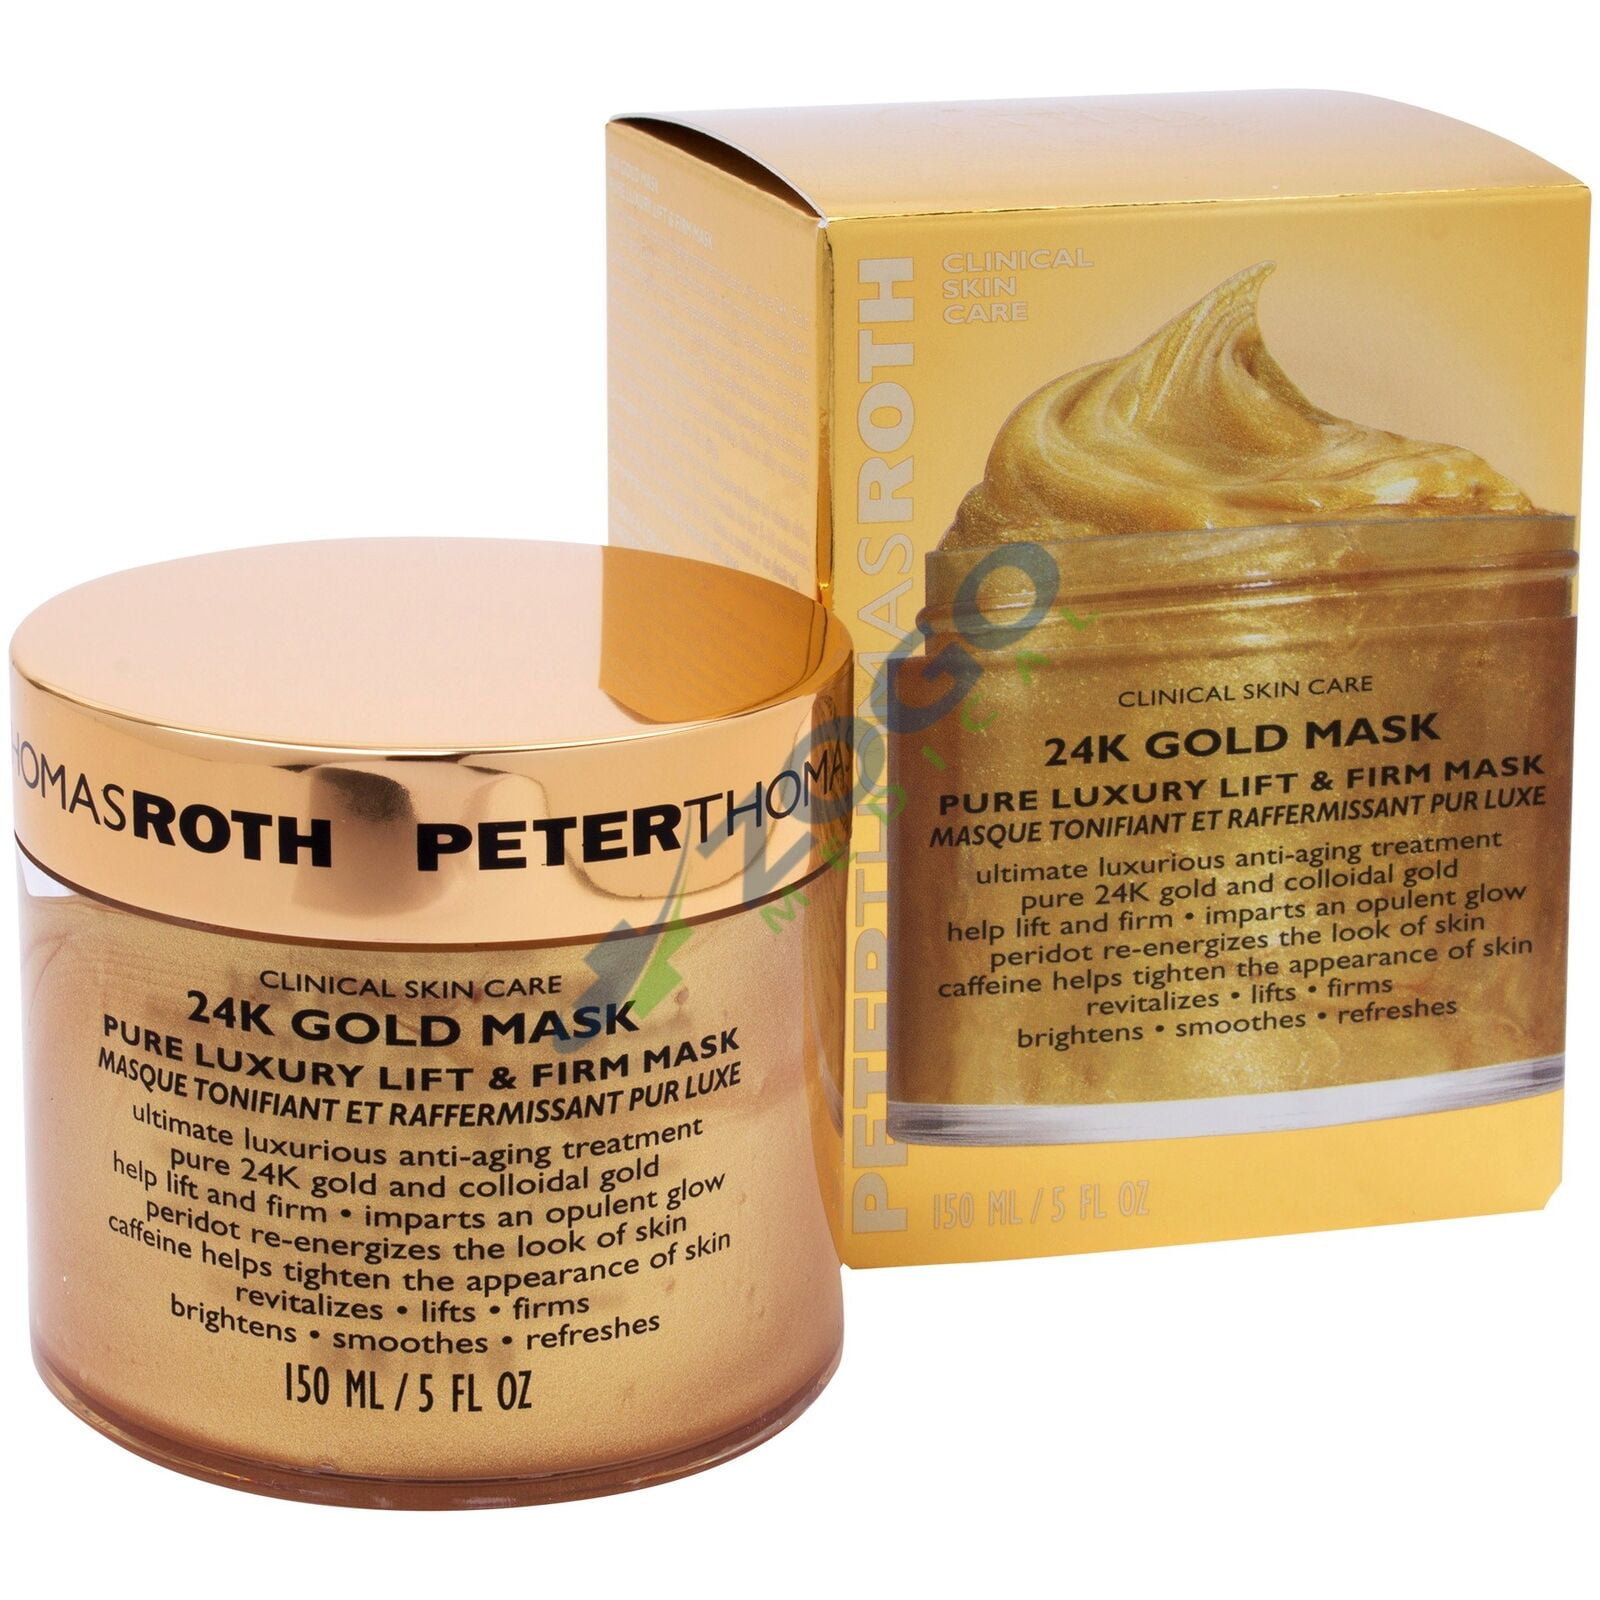 Peter Thomas Roth 24K Gold Mask 5 oz / ml SHIPPING) - Walmart.com